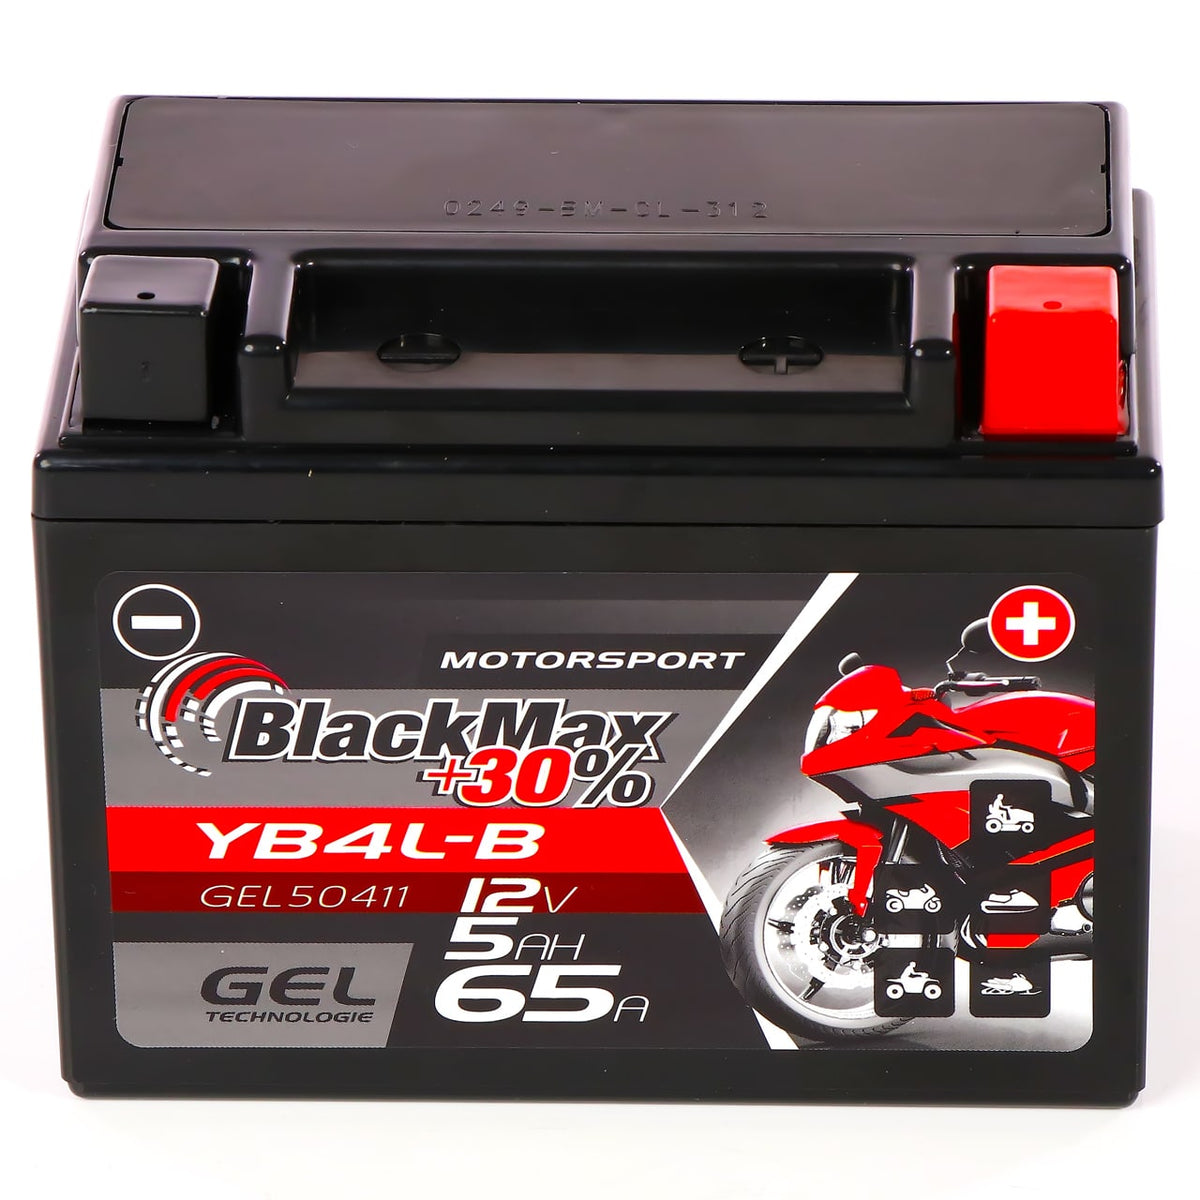 BlackMax +30% Motorsport 50411 GEL 12V 5Ah 65A/EN